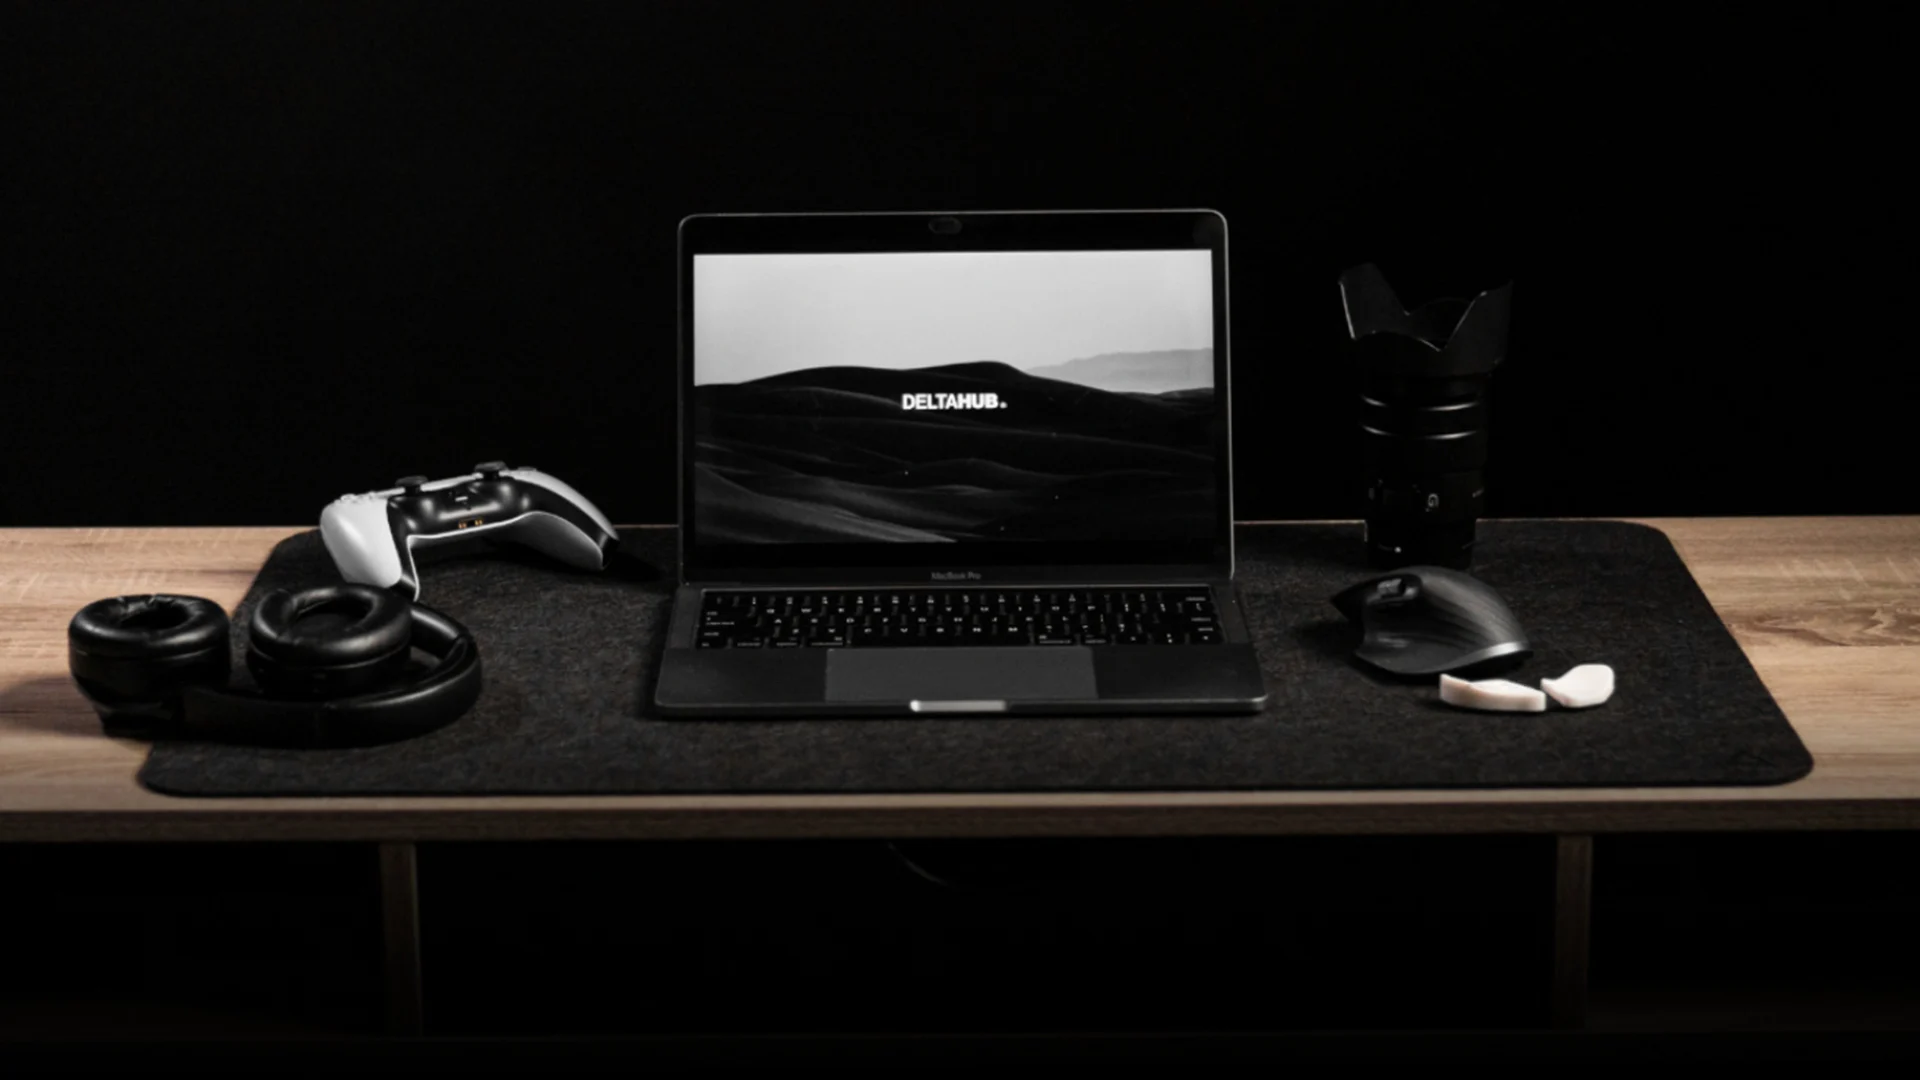 DeltaHub Deskpad: Minimalistic & Anti-slip - Autonomous.ai